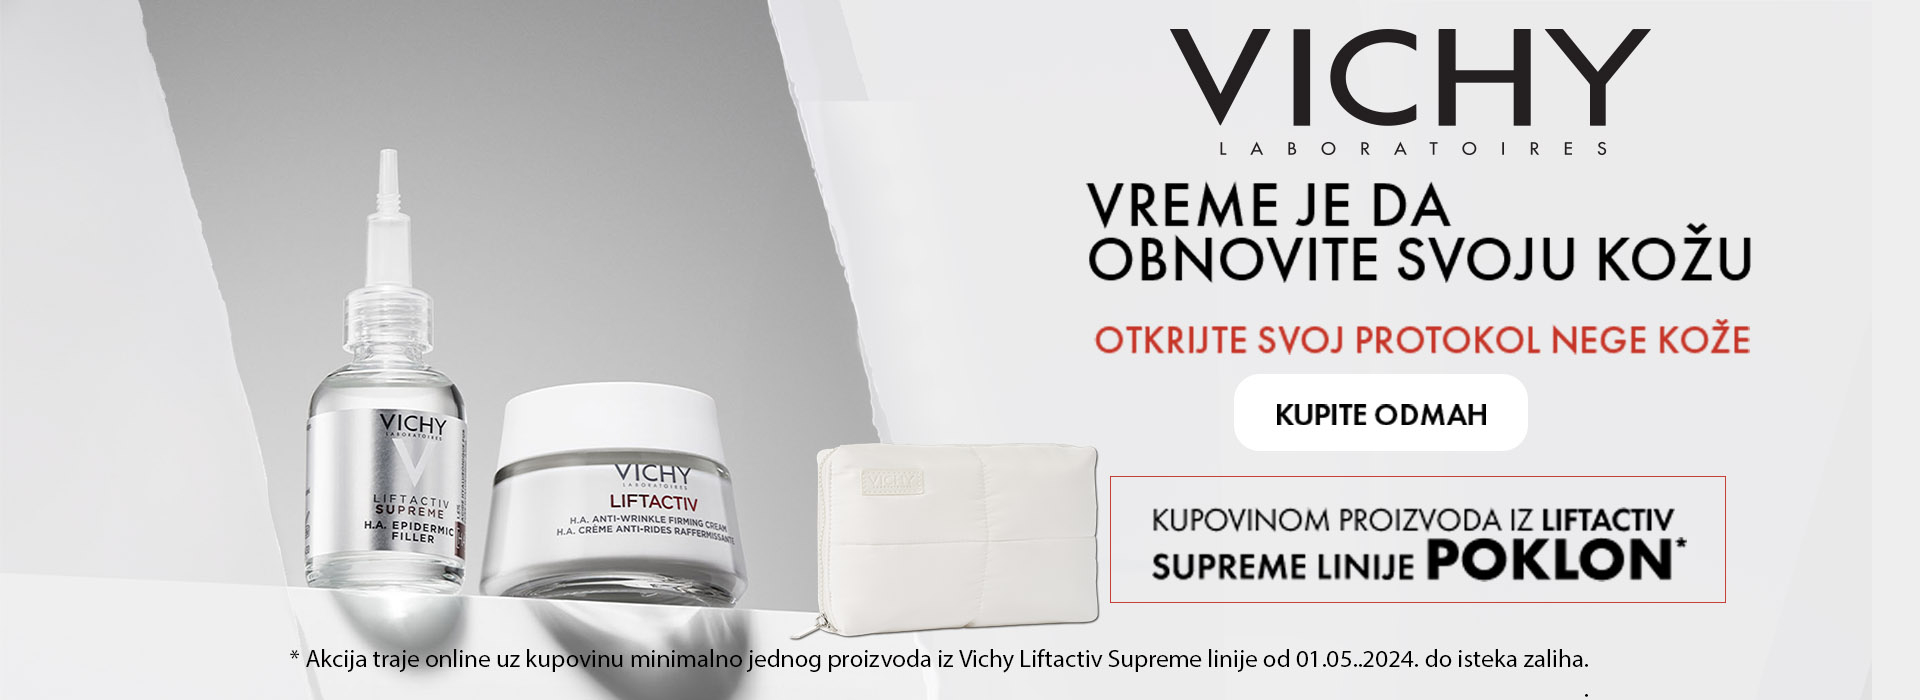 Vichy Supreme poklon 05/24 brend - Srbotrade